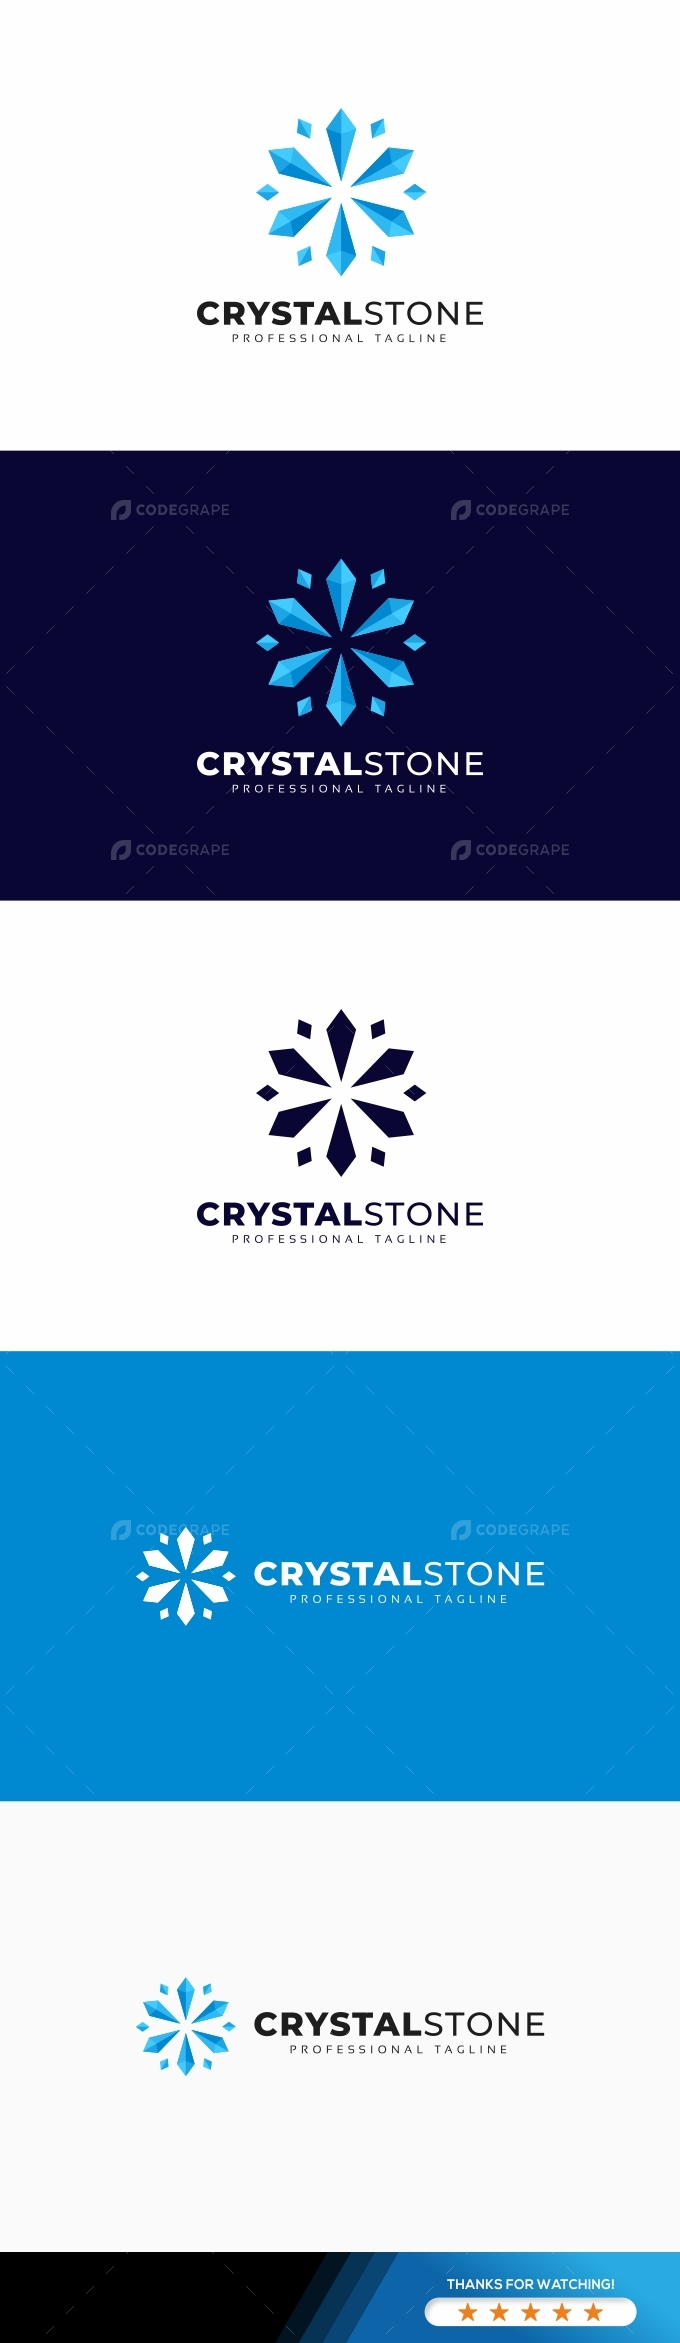 Crystal Stone Logo